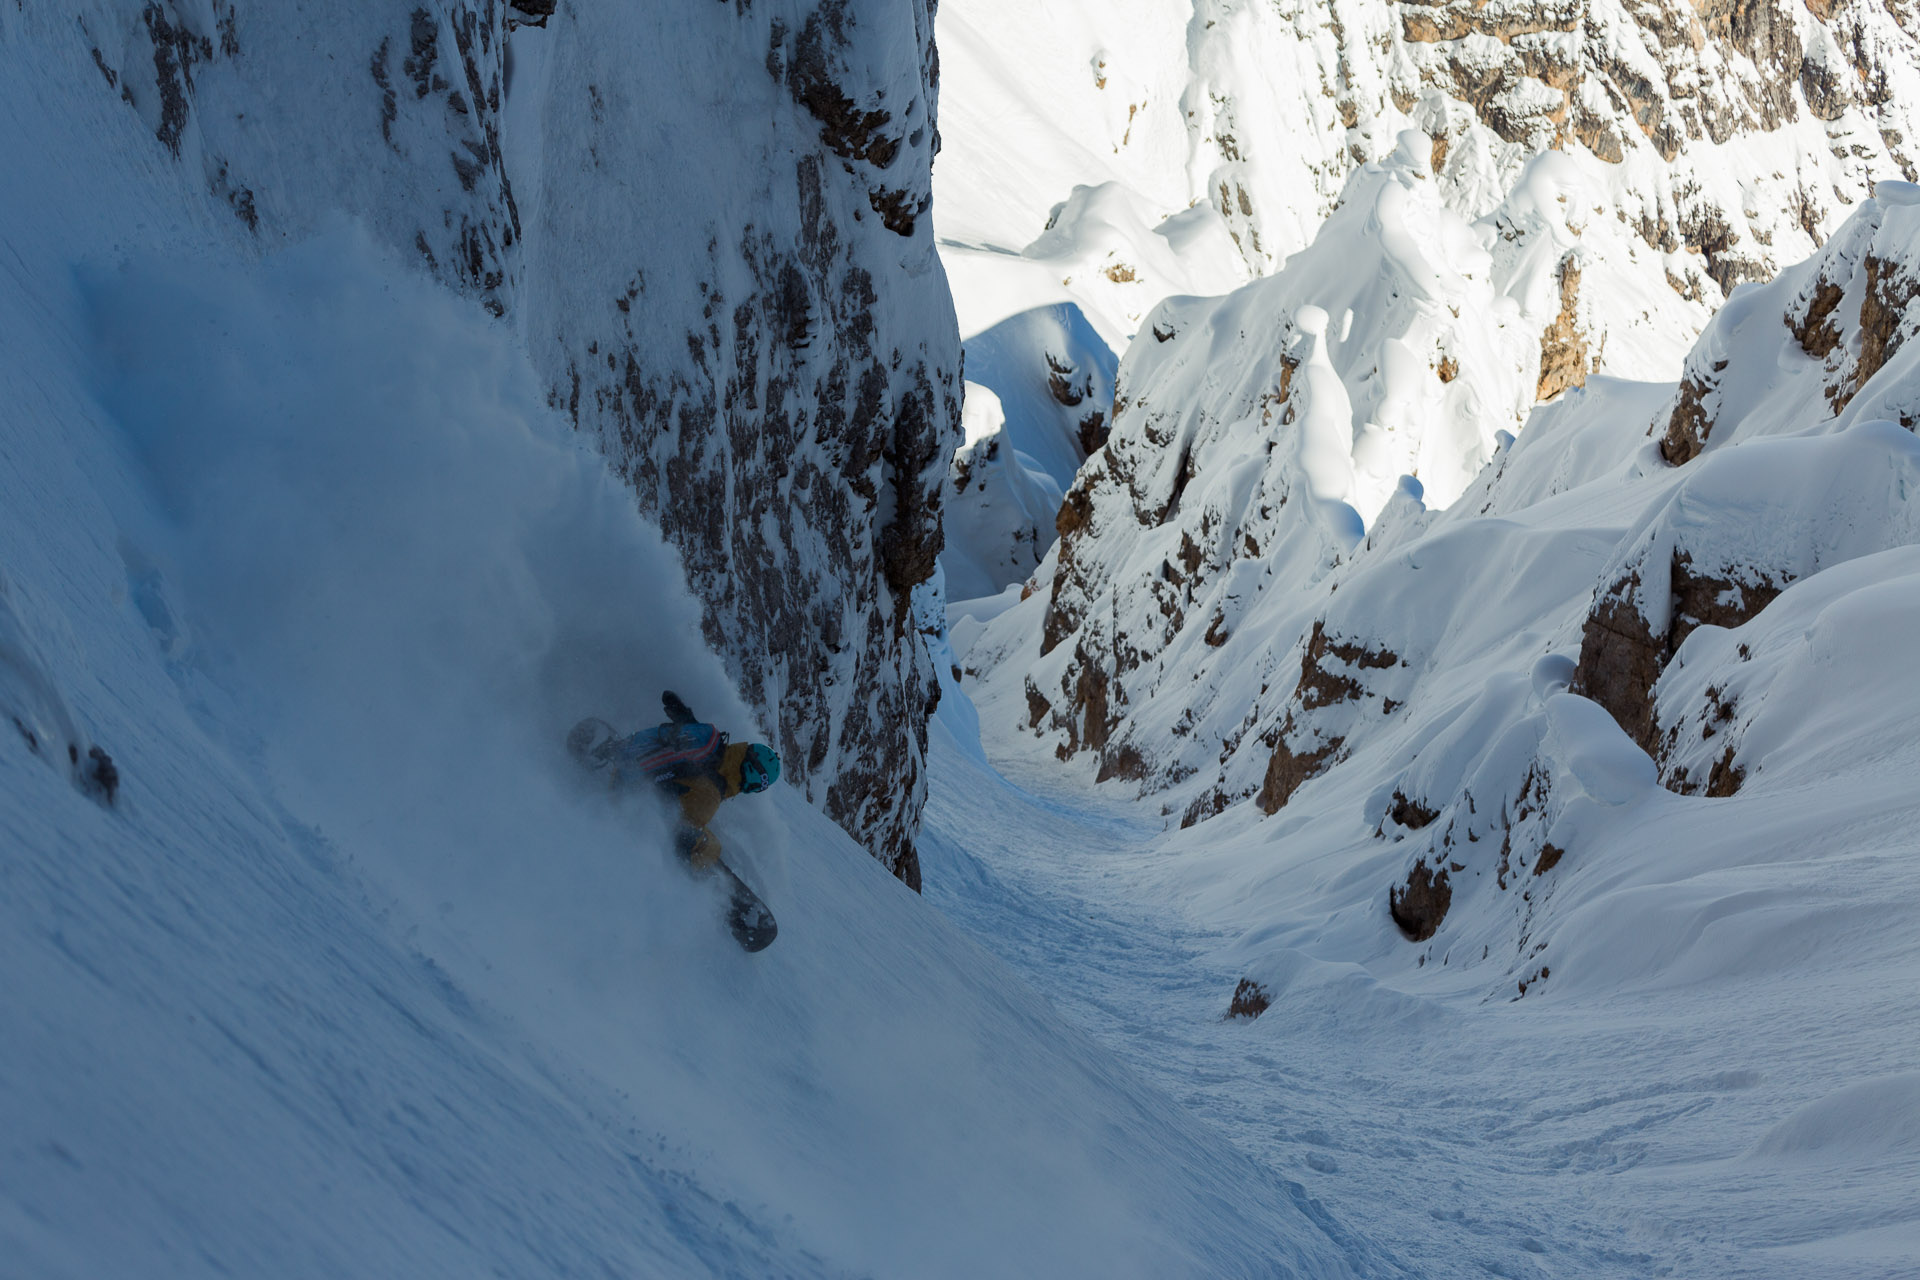 Bibi Pekarek drops in to a chute in the Dolomites